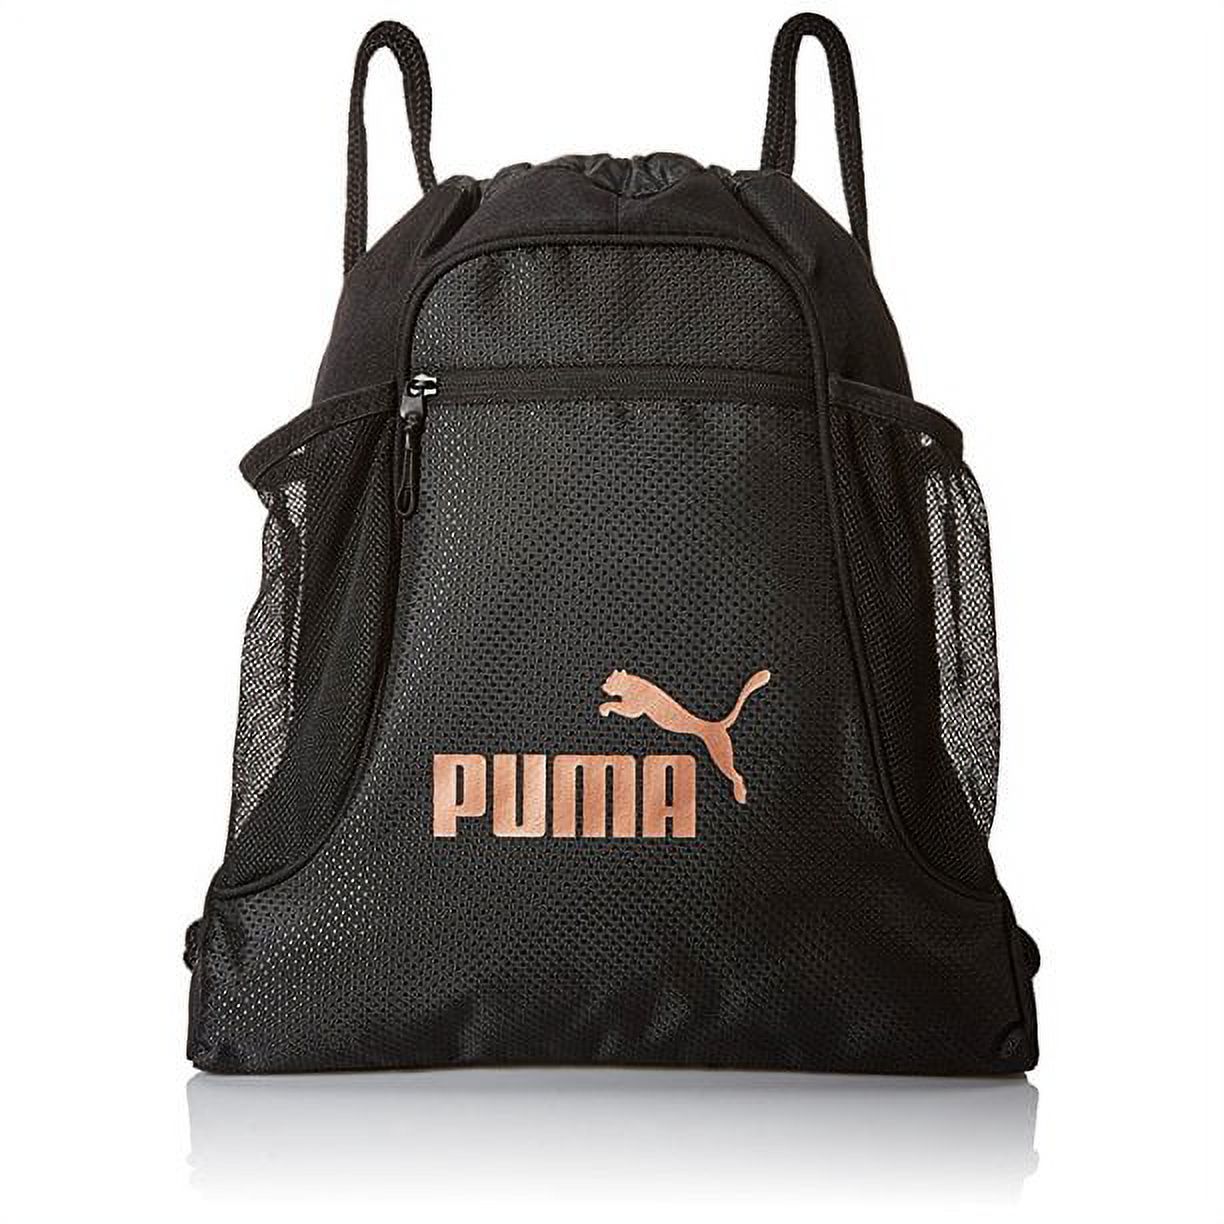 Puma Evercat Equinox Cinch Backpack, Black Gold - image 1 of 2